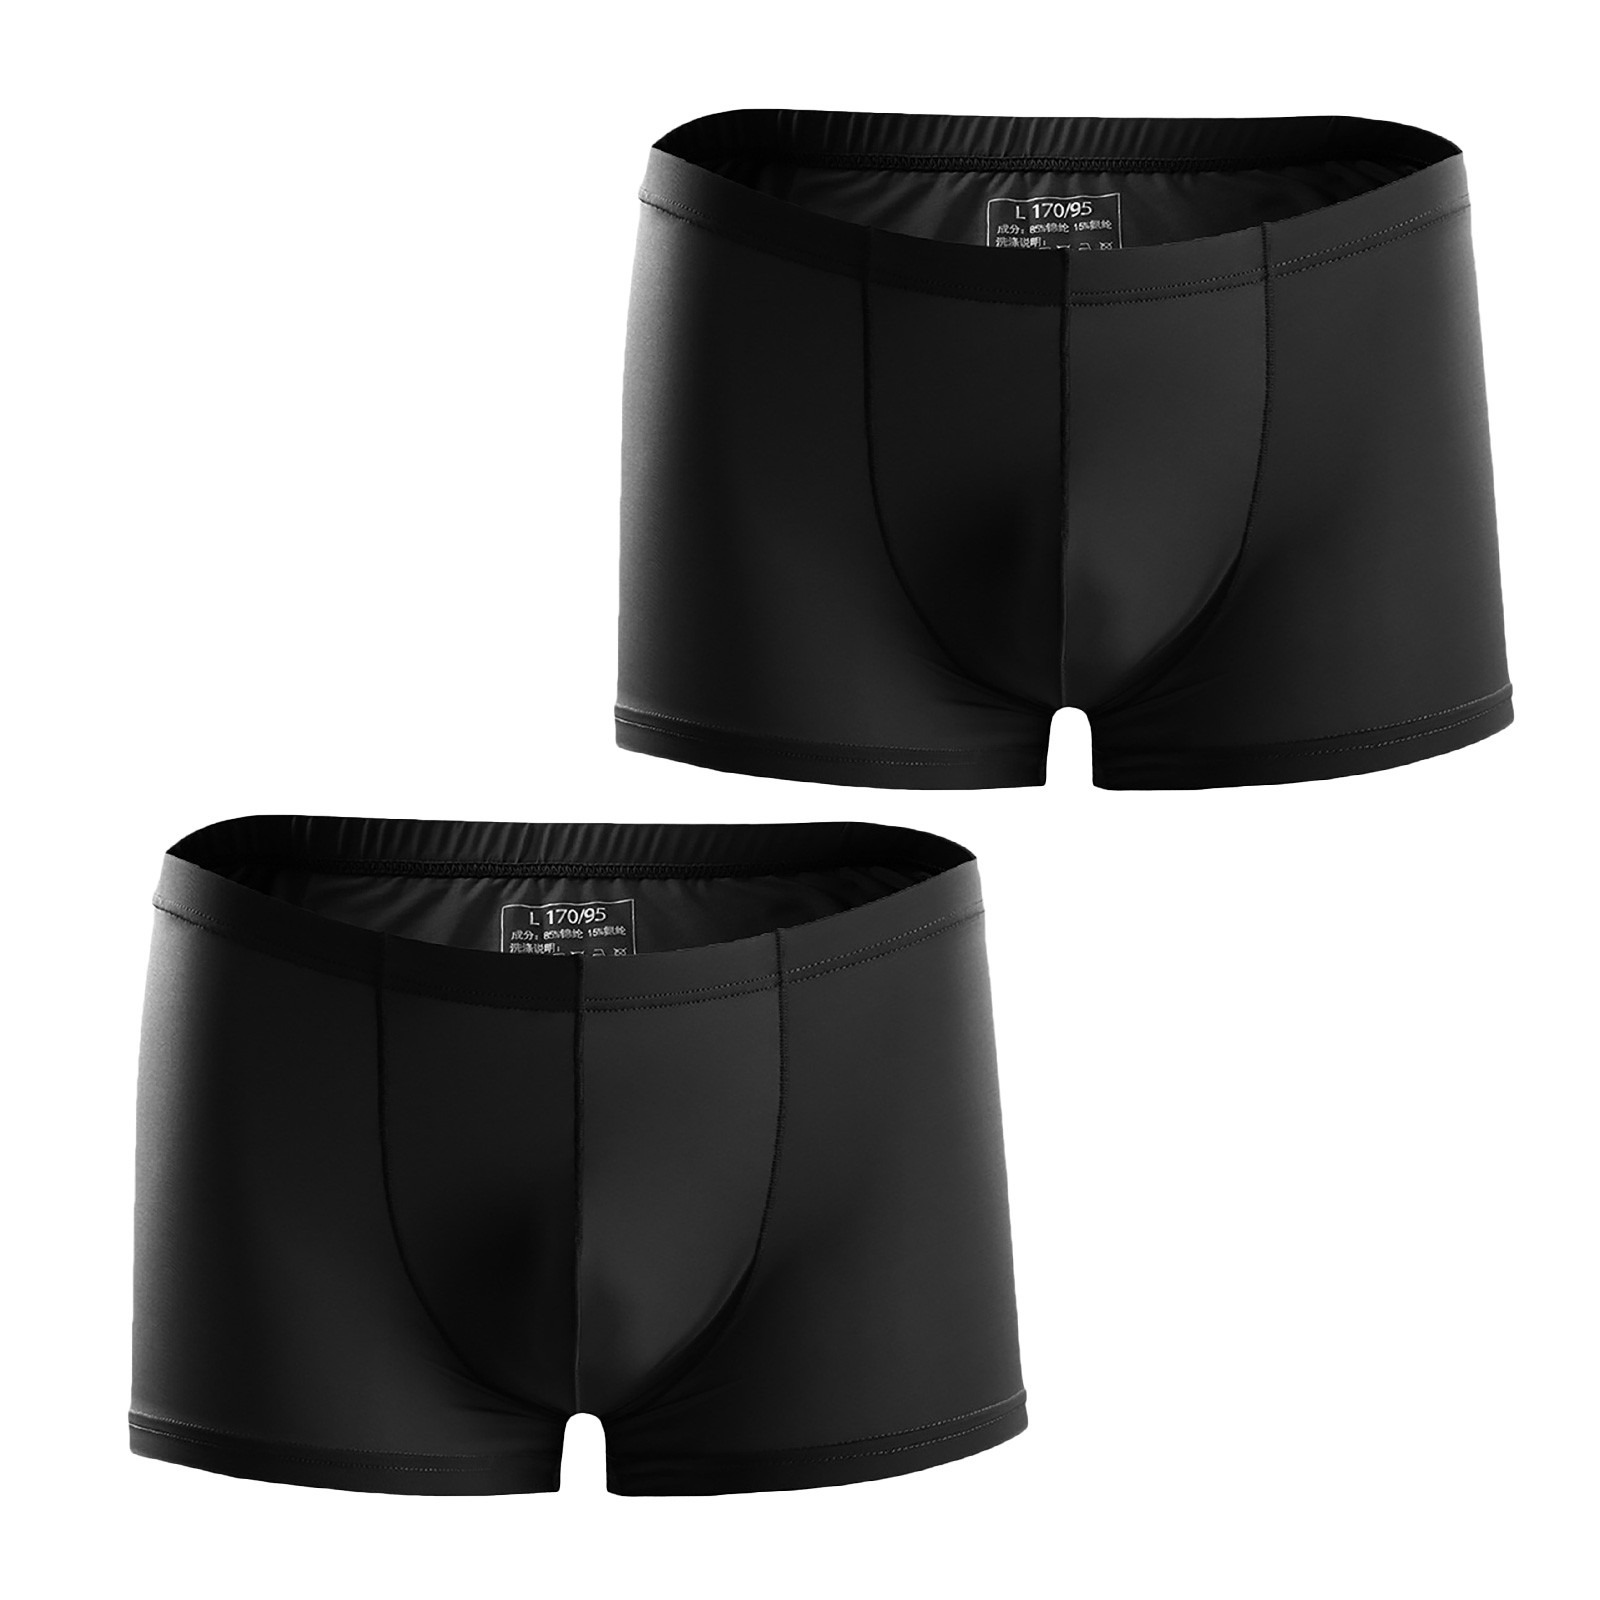 Men's Ice Silk Underwear Cotton Boxer Briefs Breathable and Soft ...